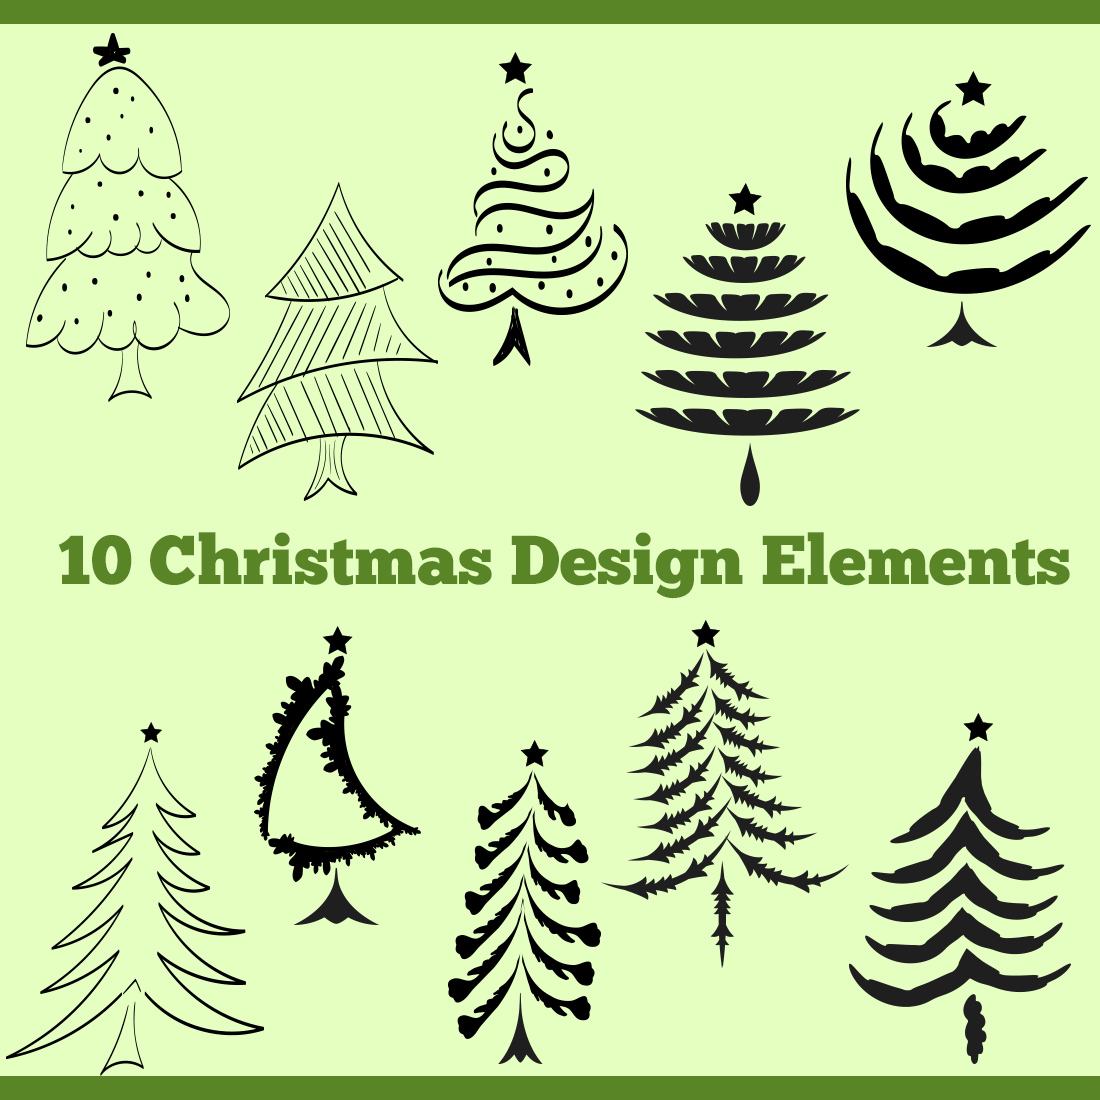 Tree Christmas Design cover image.